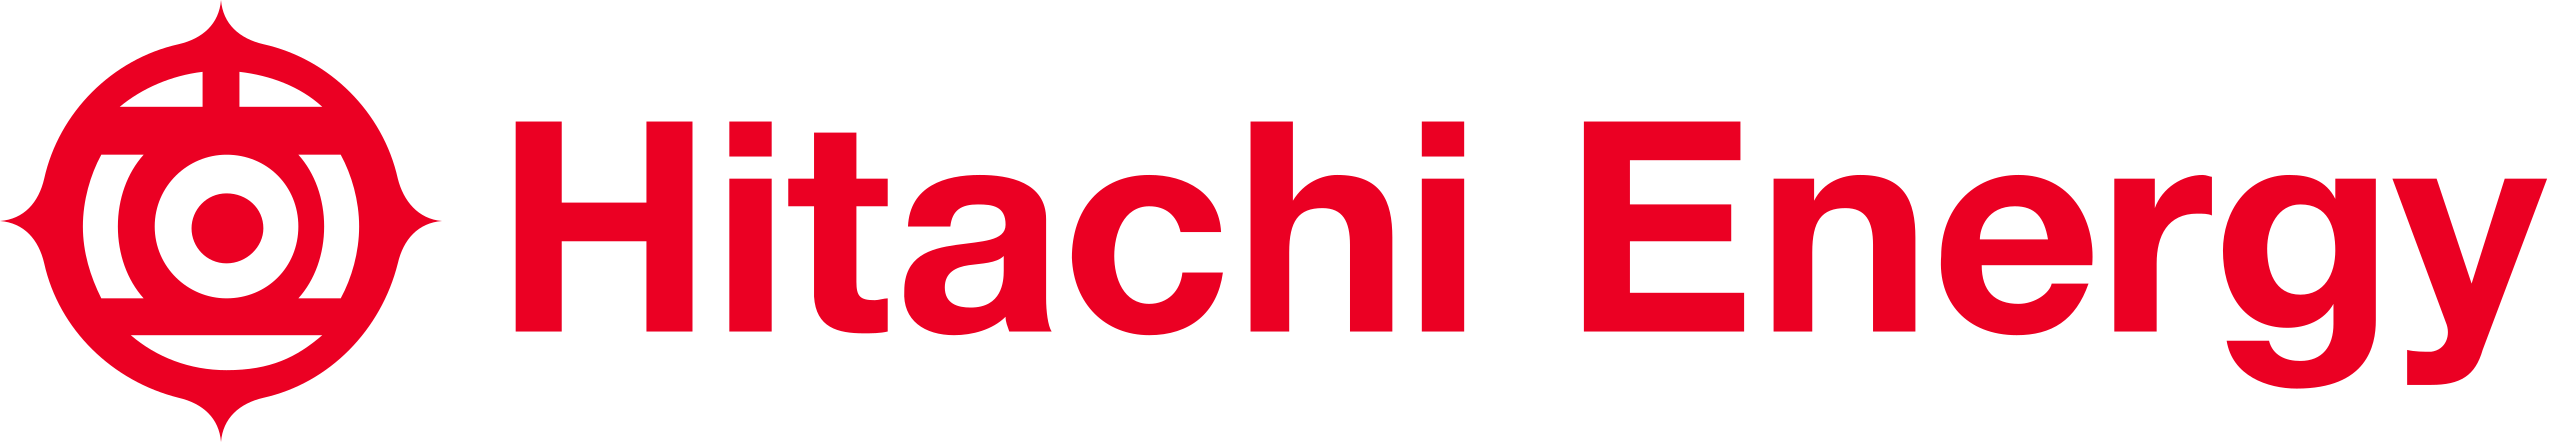 Hitachi-energy-mark-red.svg